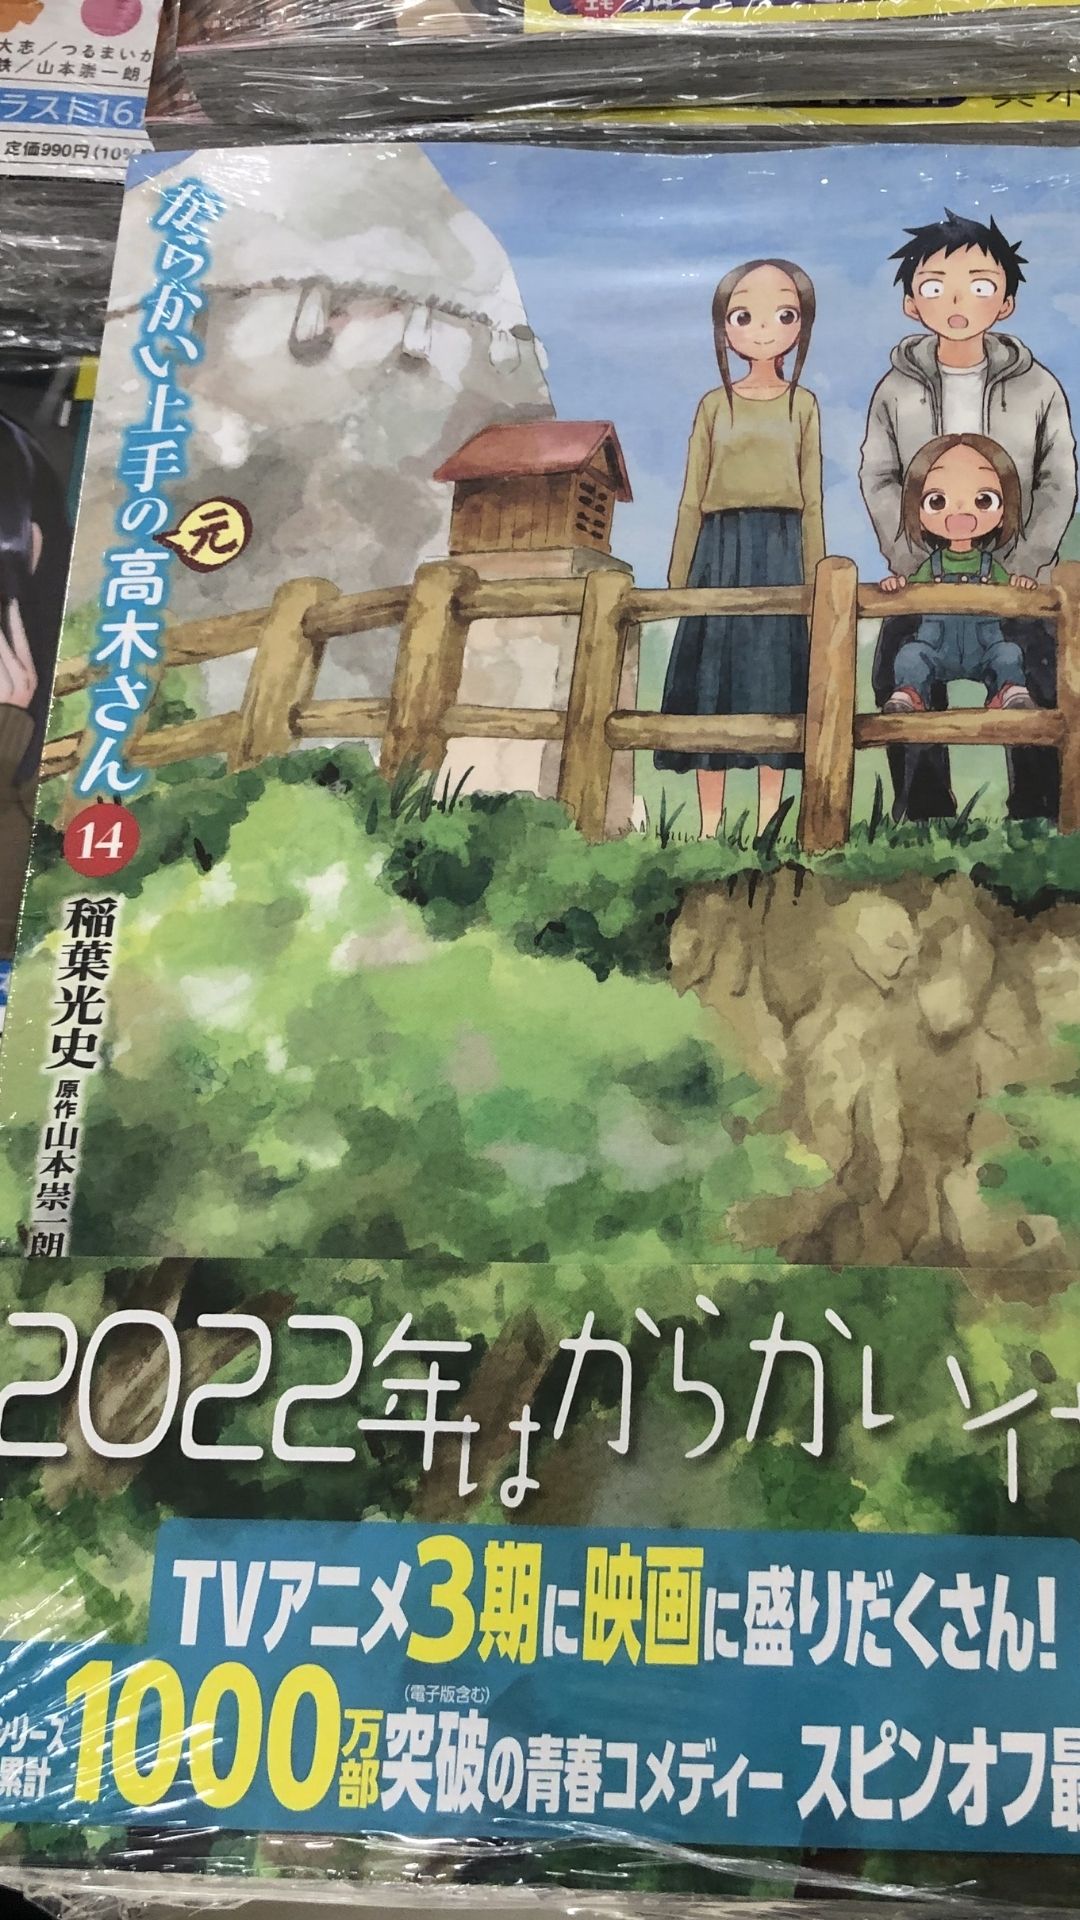 VIZ | Read Insomniacs After School, Chapter 108 - Explore VIZ Manga's  Massive Library